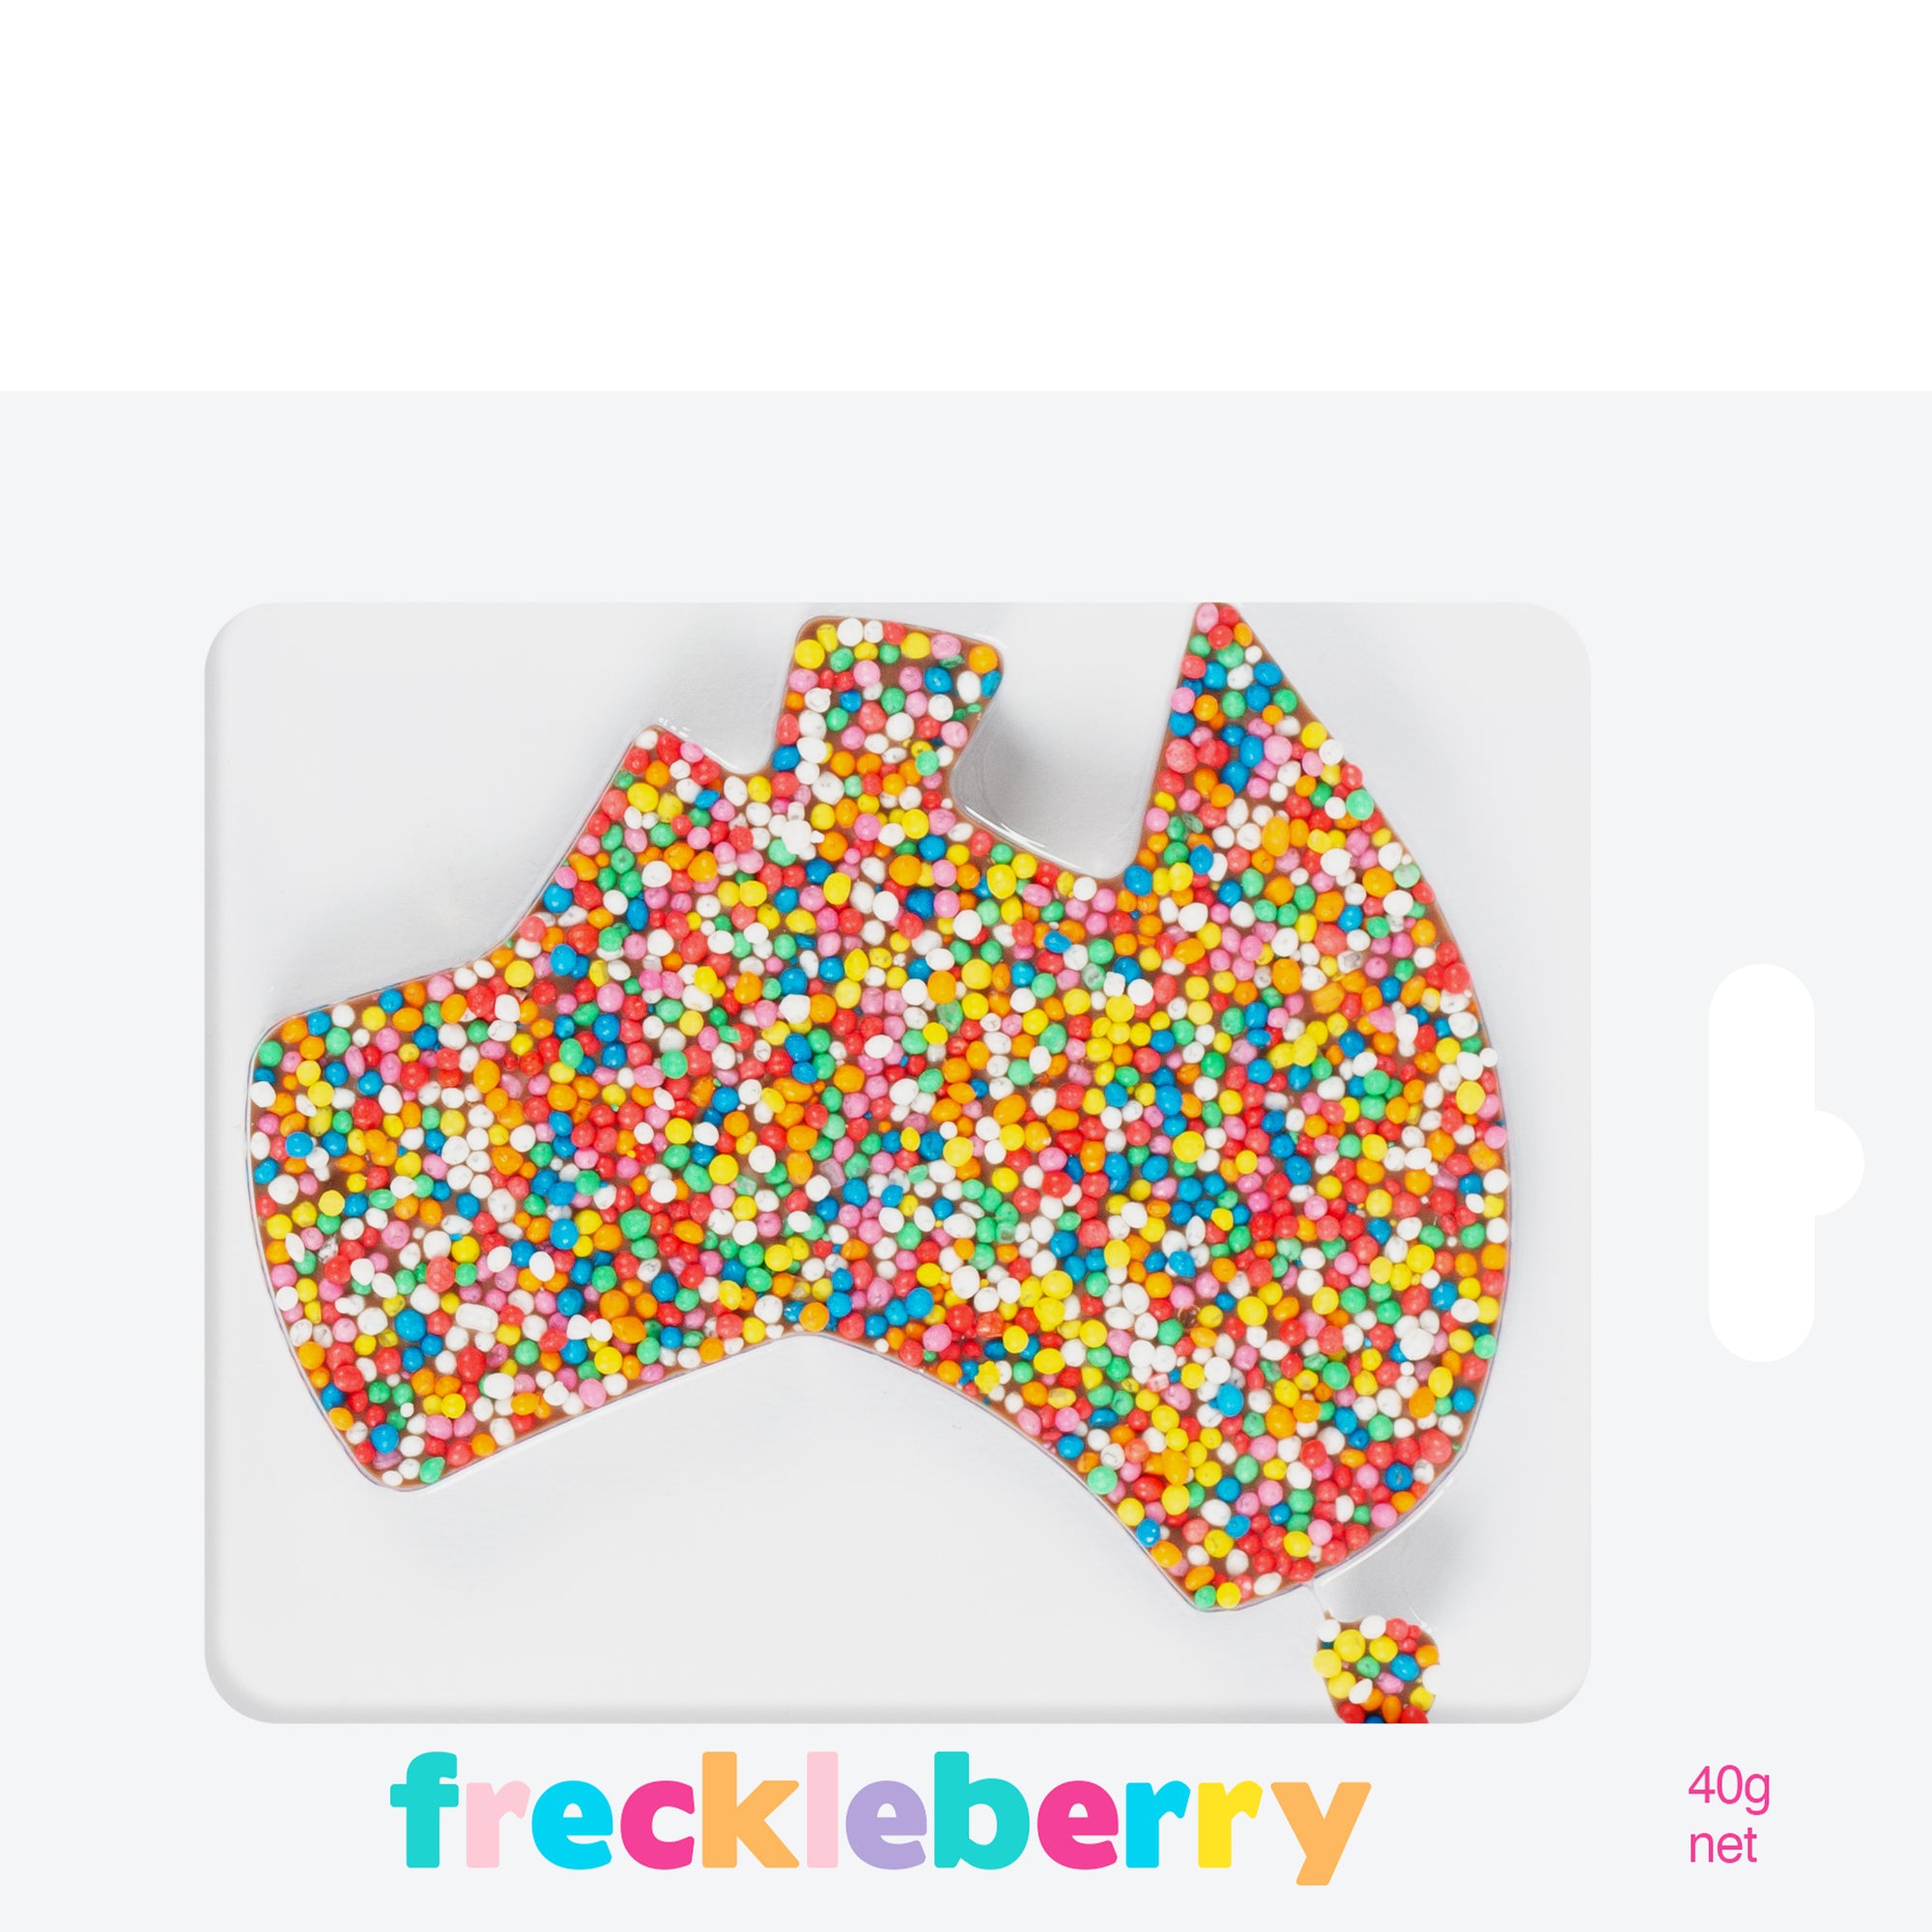 Freckleberry - Australia Map